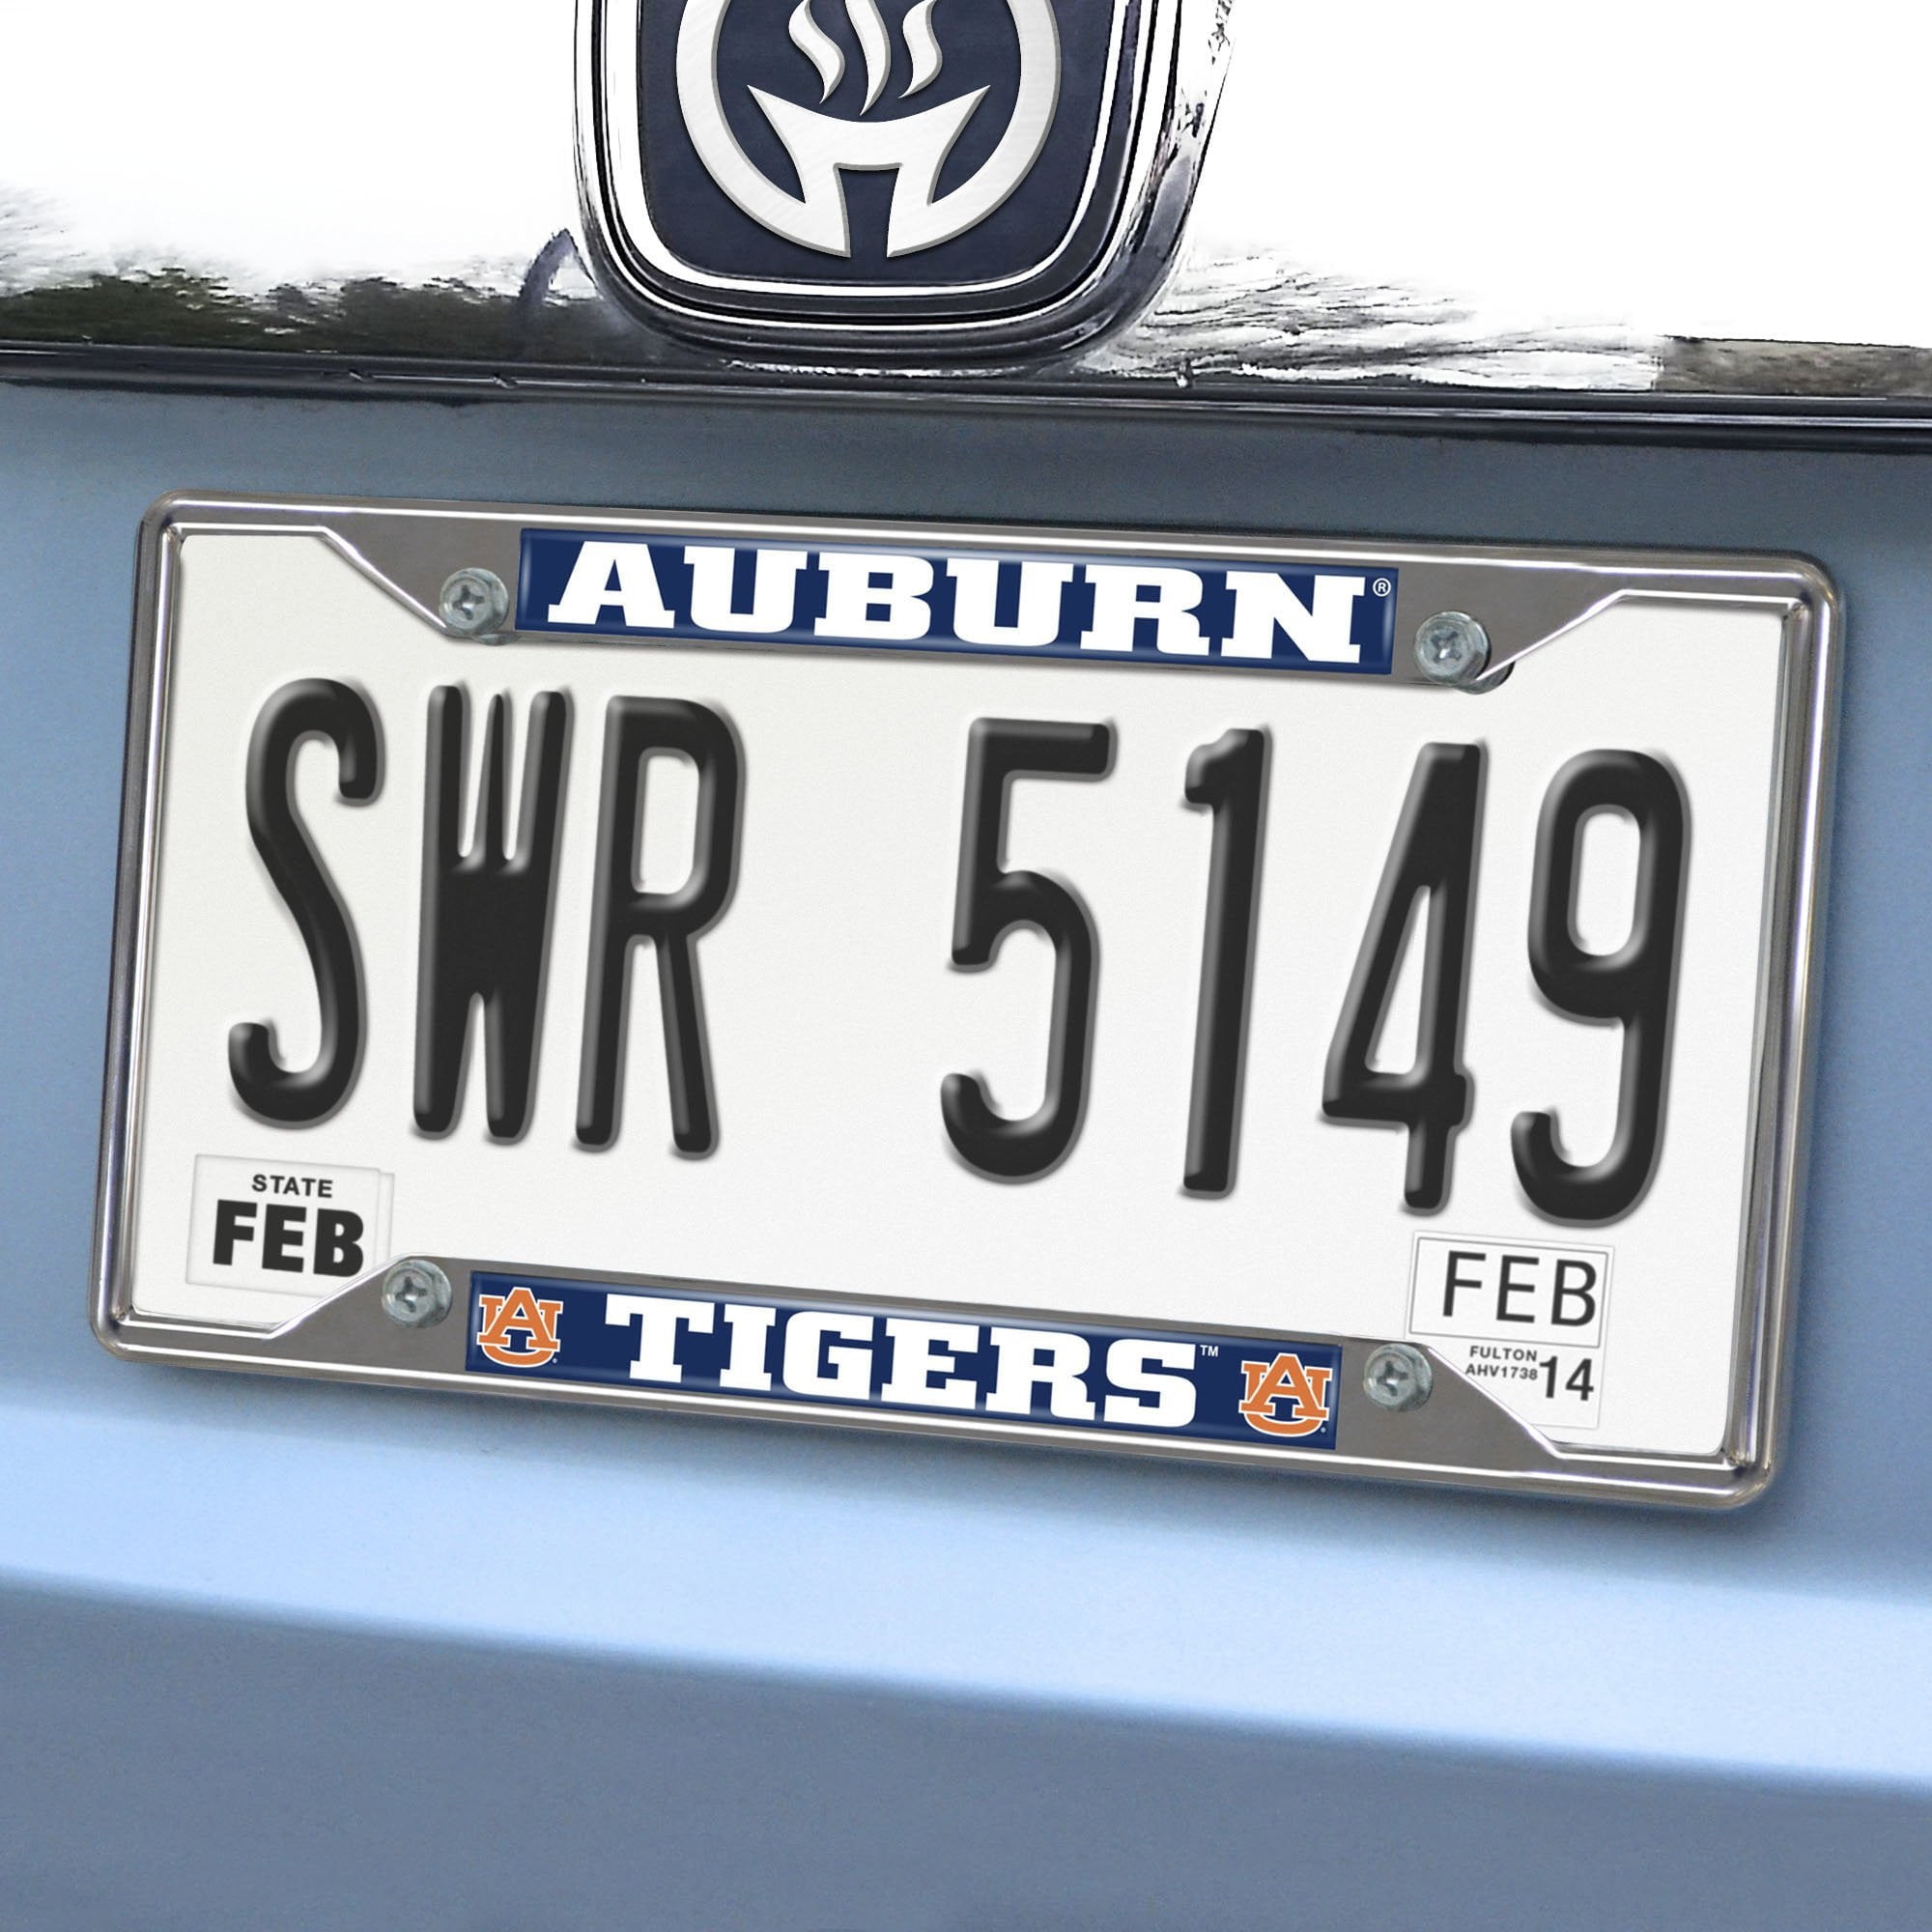 Auburn Tigers License Plate Frame